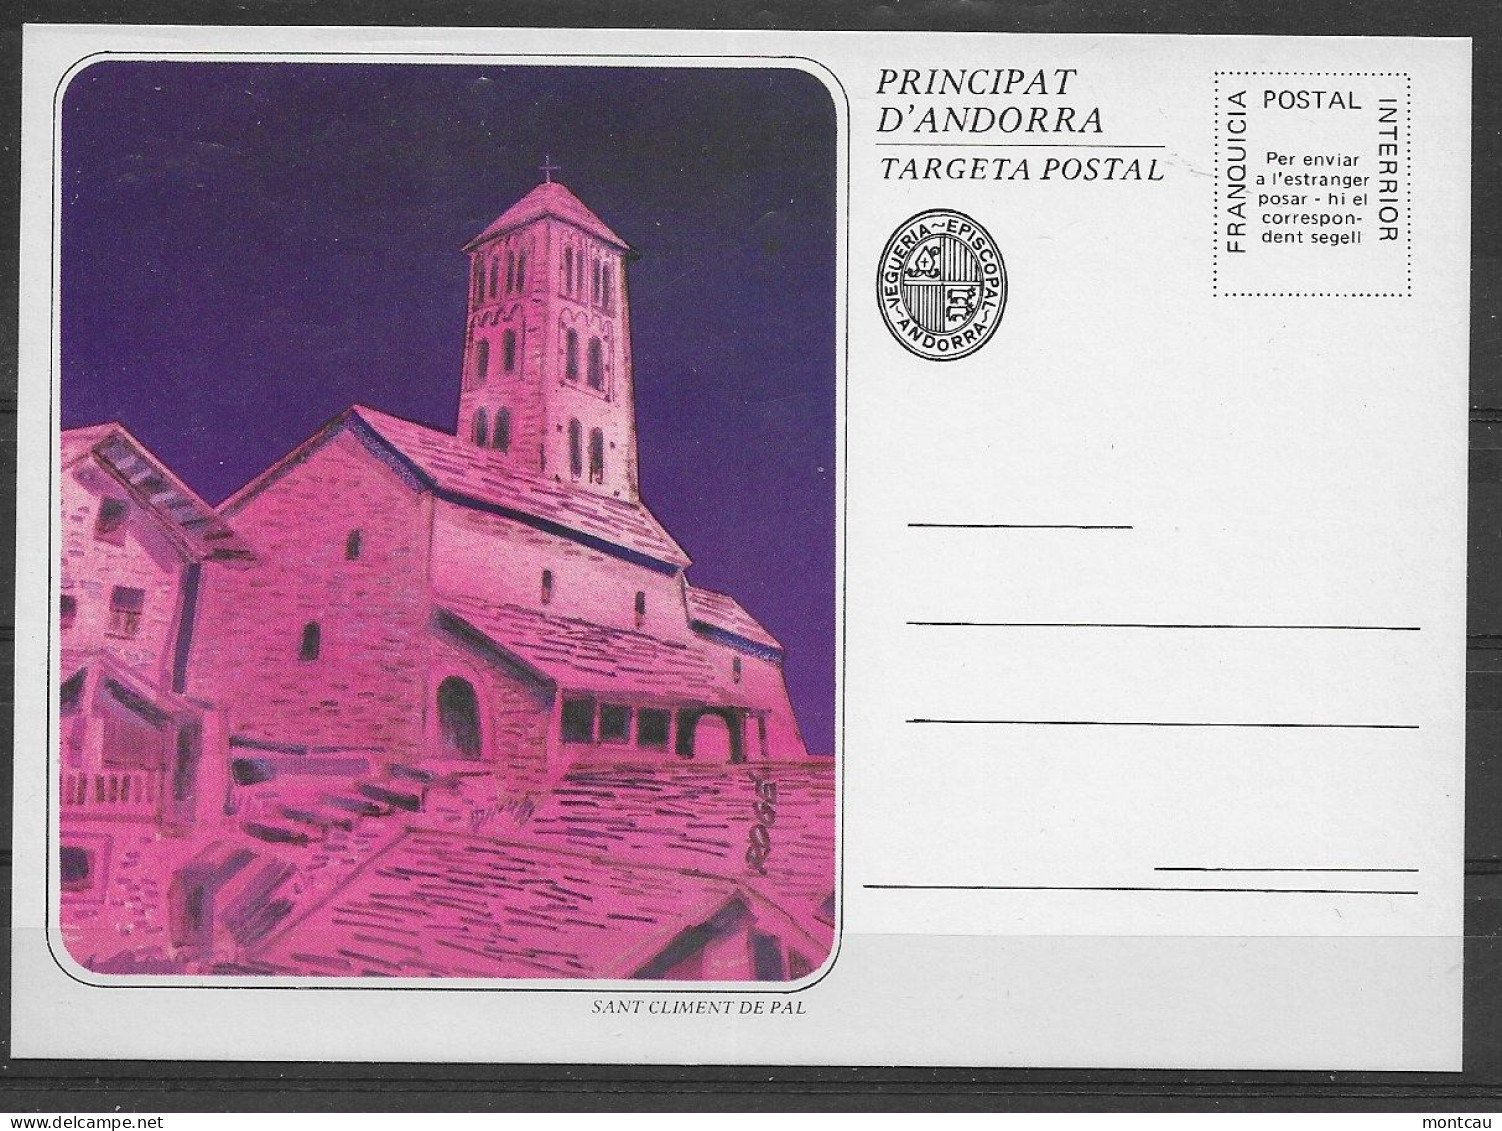 Andorra - Targeta Postal - Episcopal Viguerie